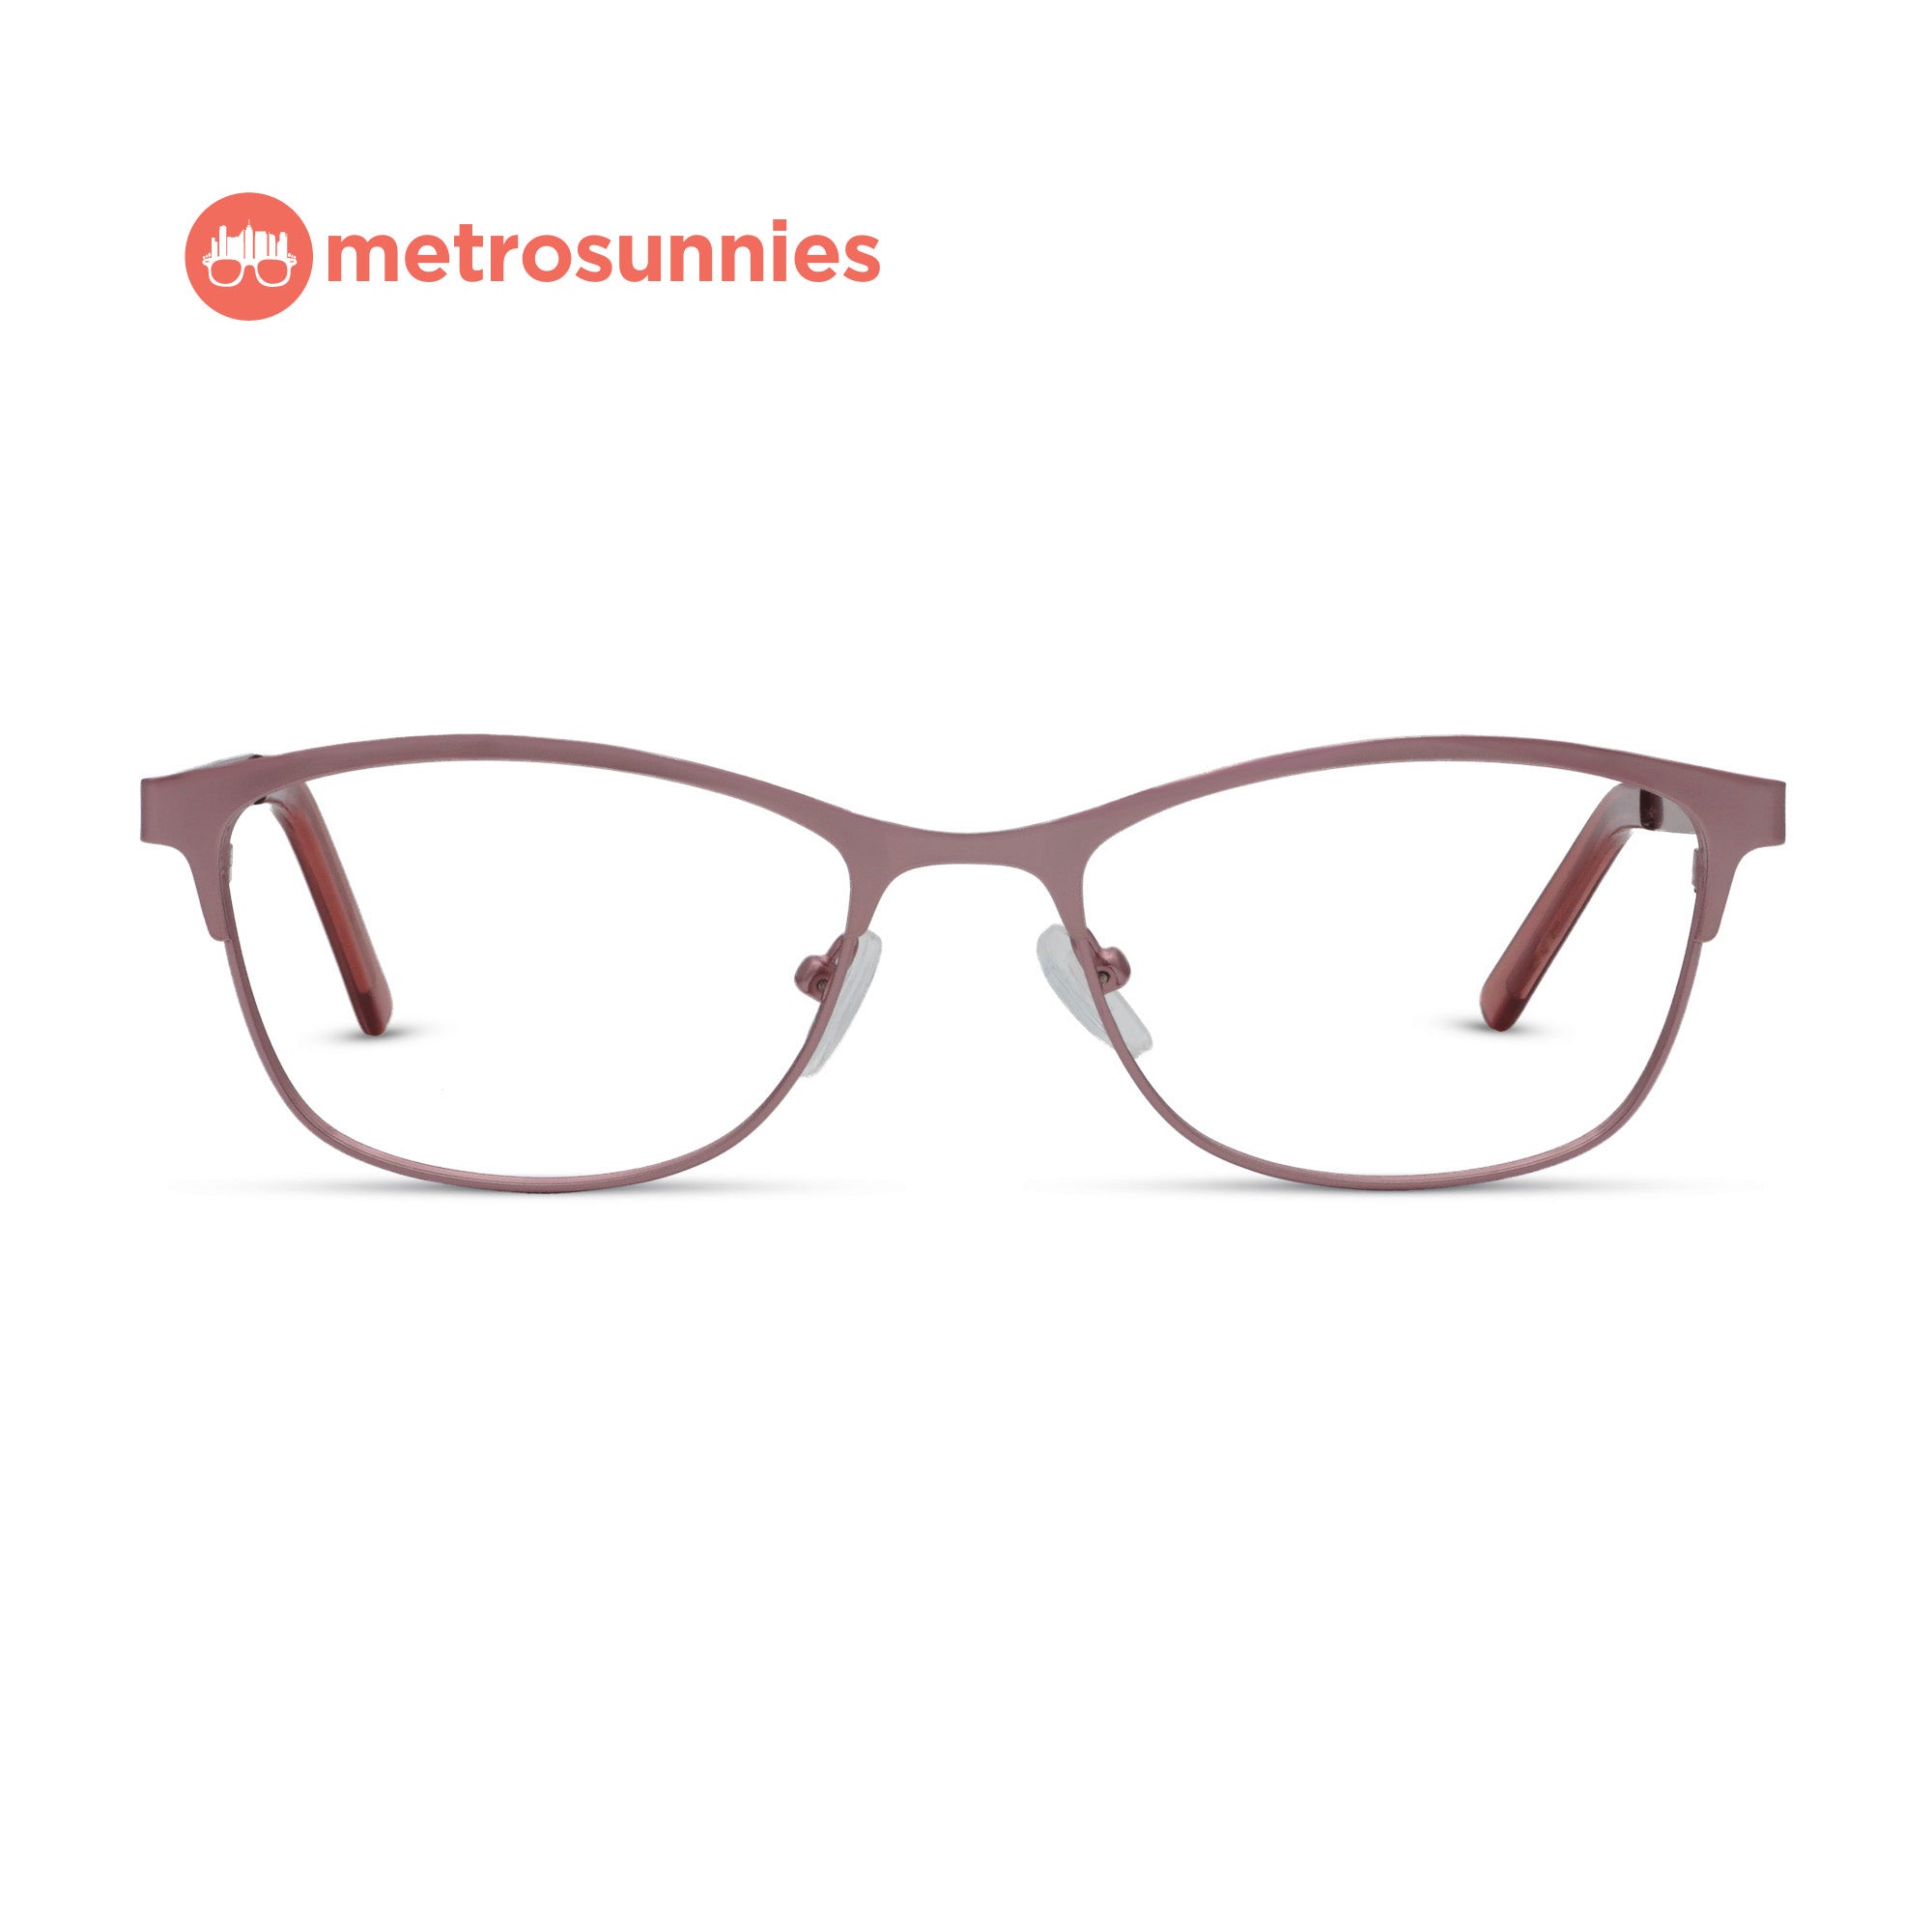 MetroSunnies Phillip Specs (Pink) / Replaceable Lens / Eyeglasses for Men and Women